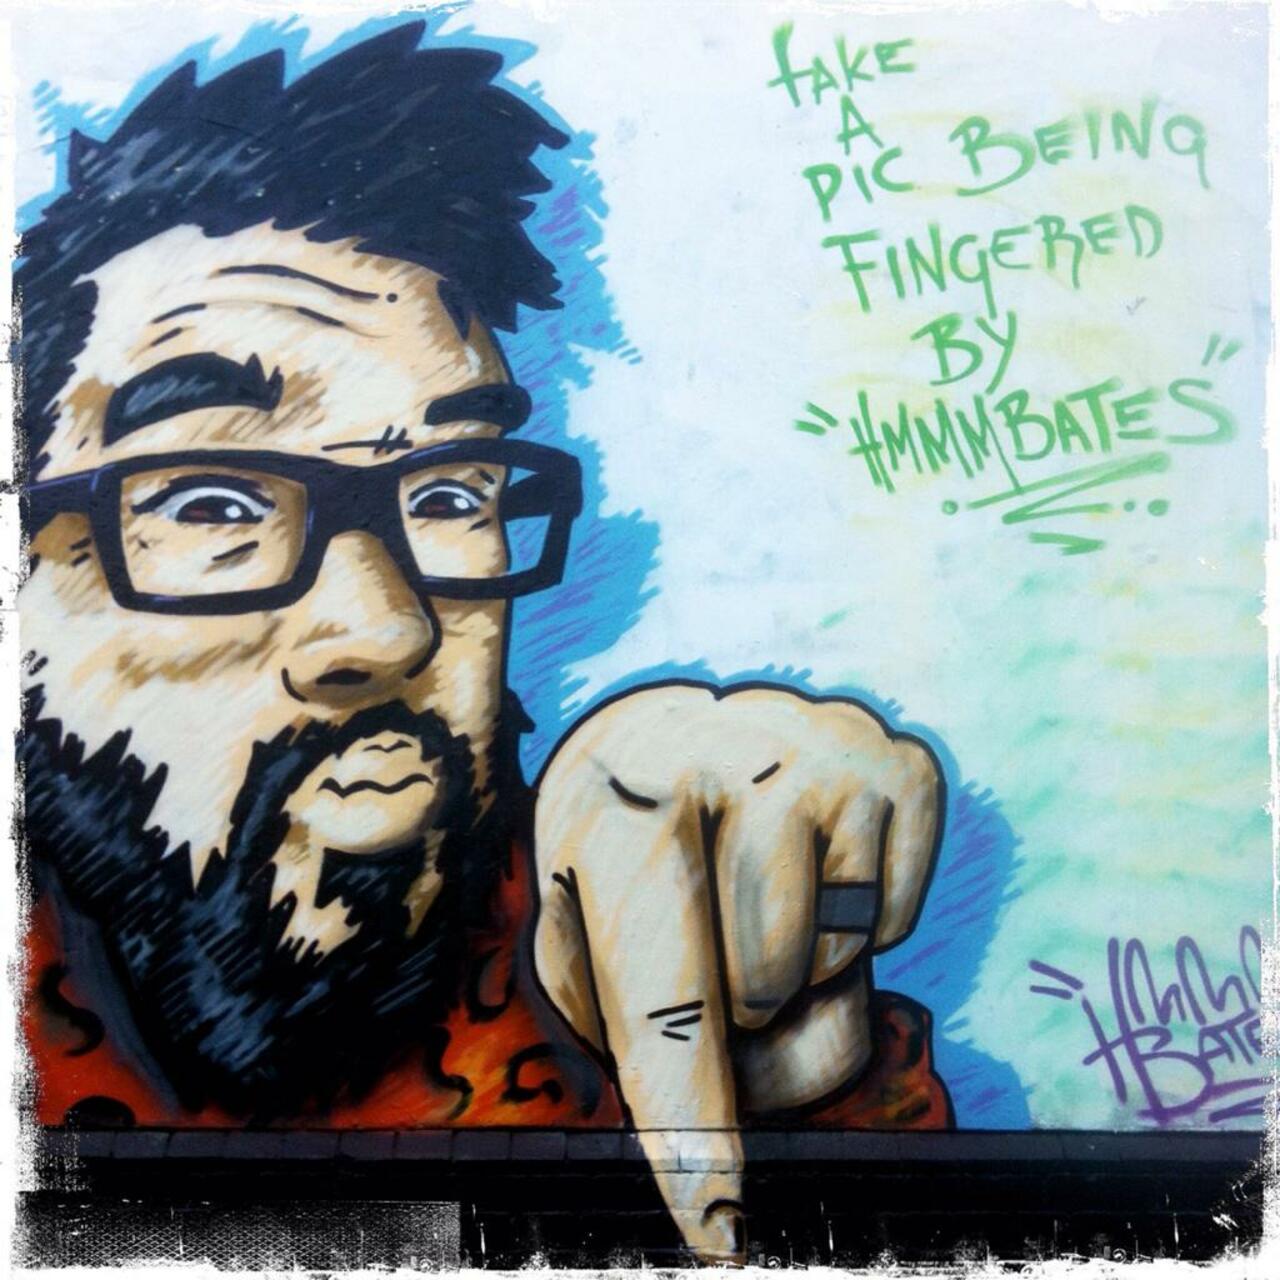 Fingered by @PauliBates at the Shoreditch Art Wall #shoreditchcurtain #streetart #graffiti http://t.co/tkct7L67FY